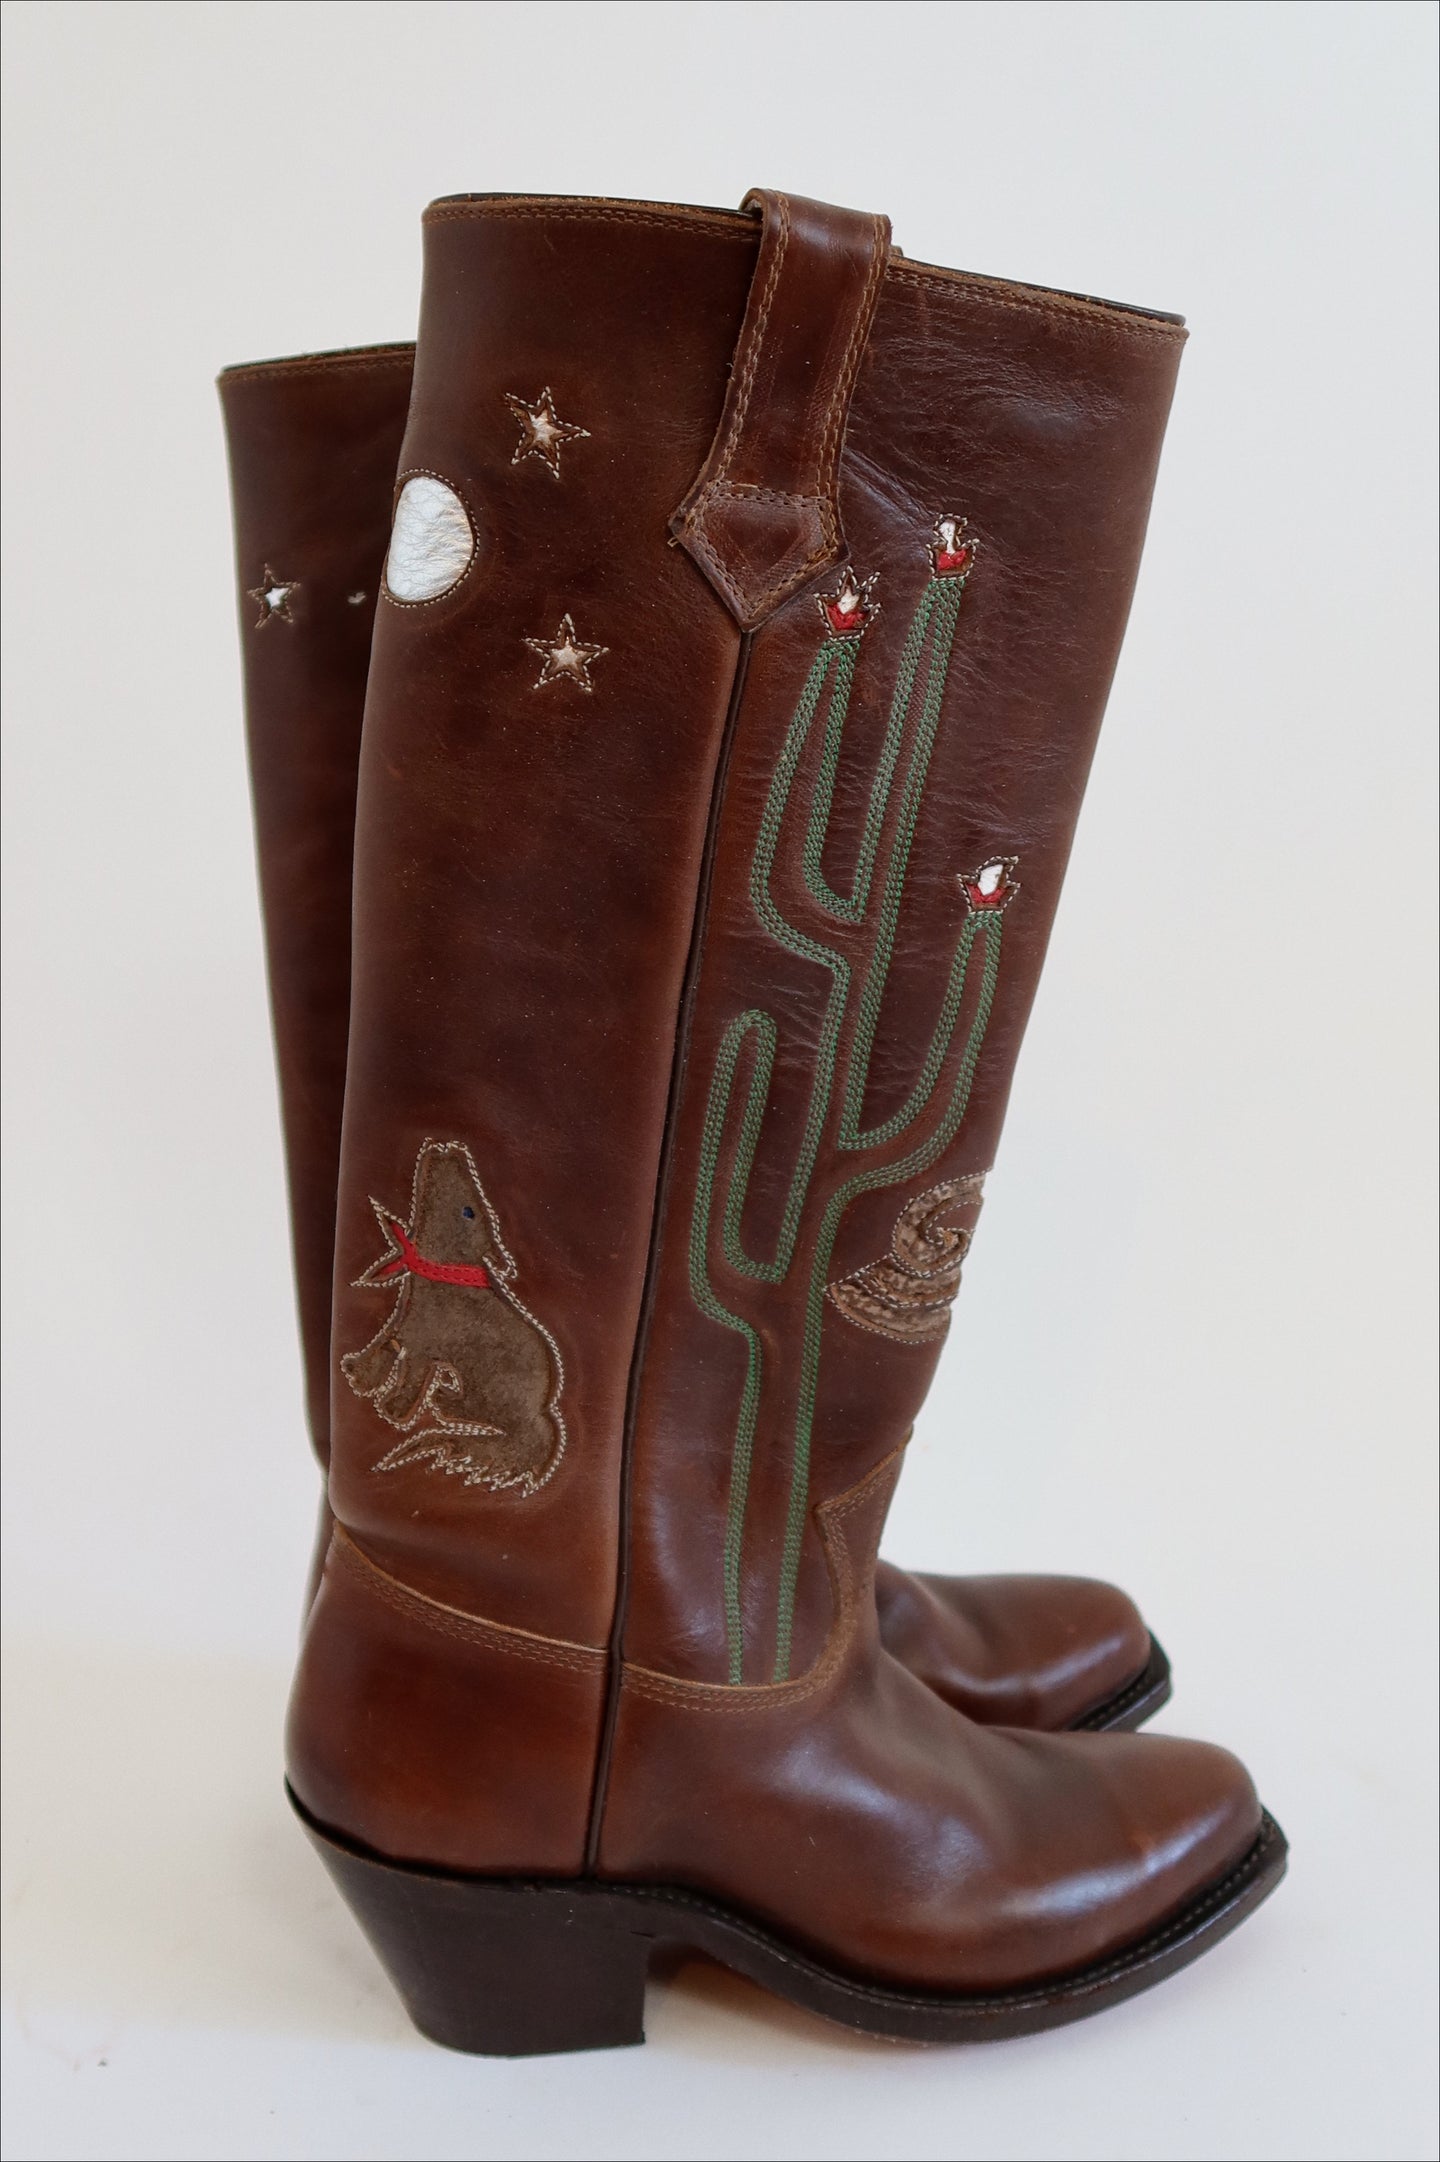 Rare 1977 Handmade Cowboy Boots